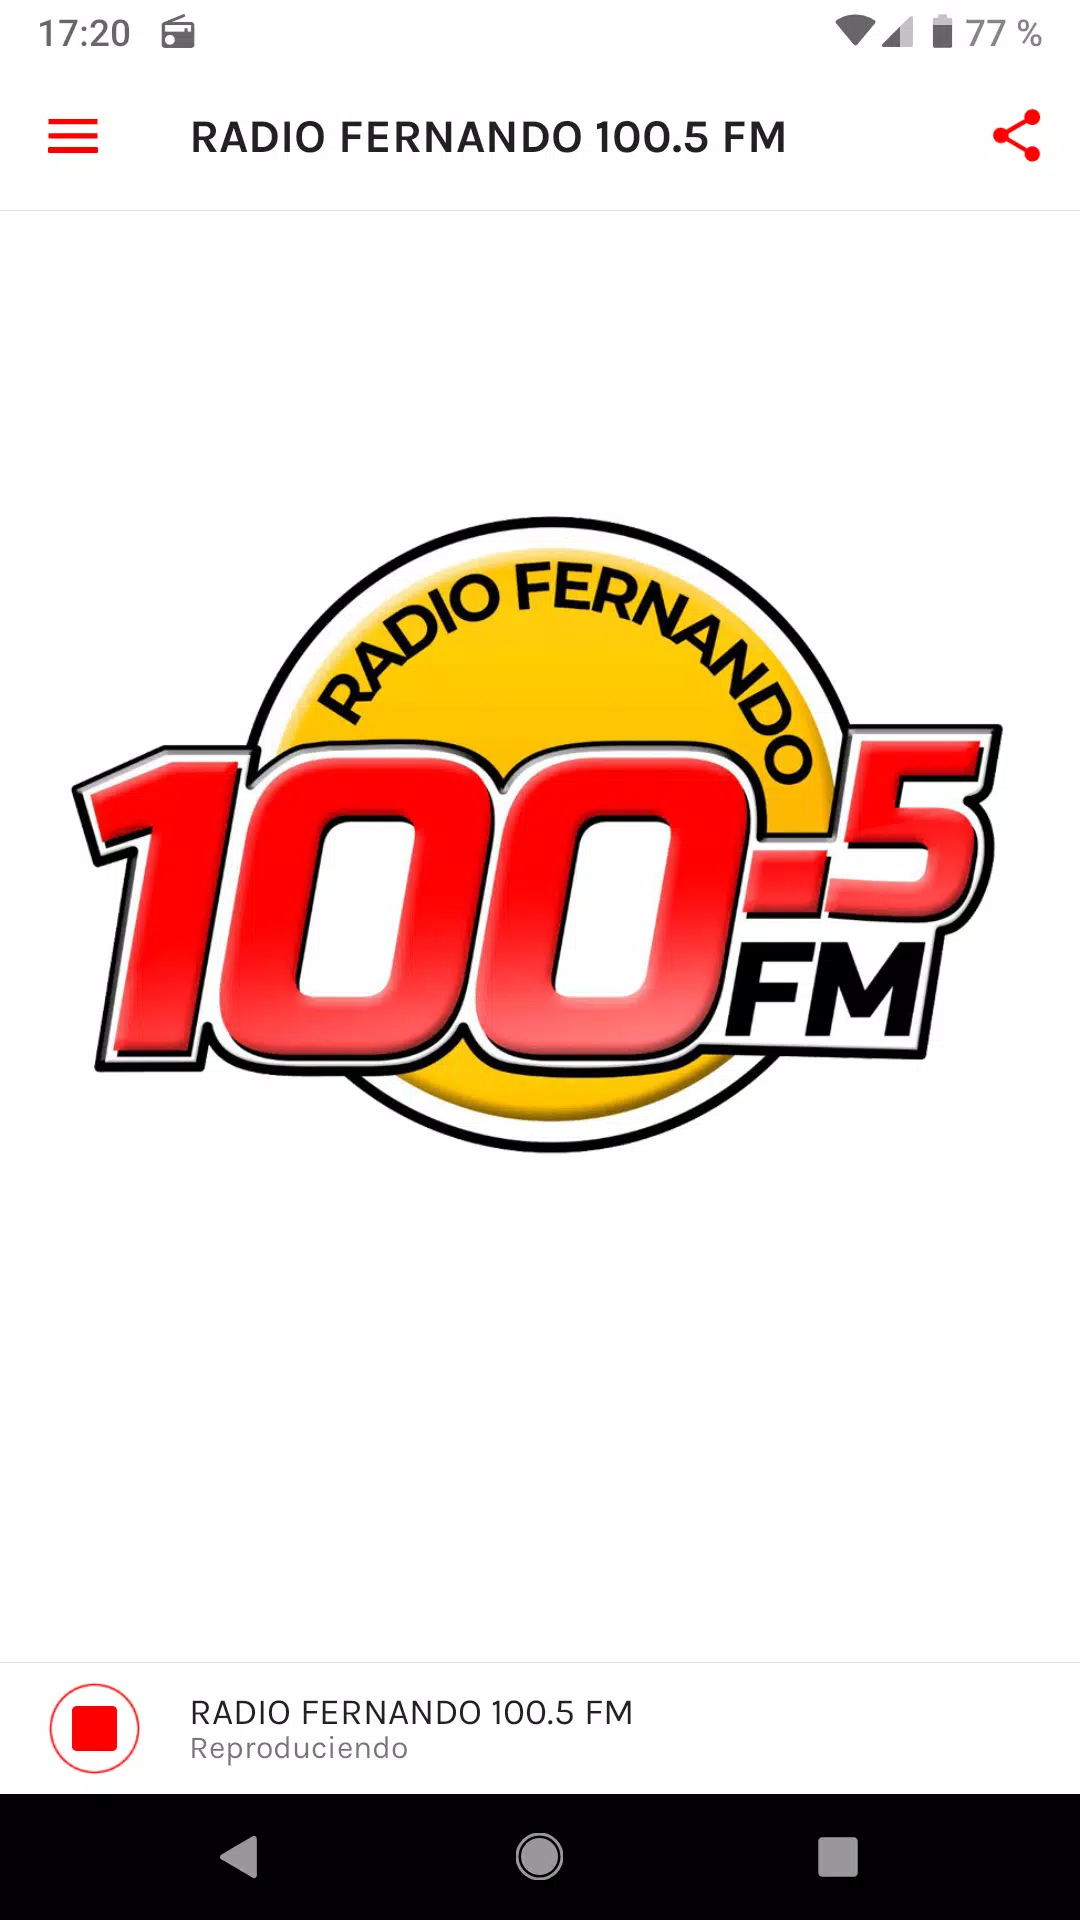 Radio Fernando 100.5 FM for Android - APK Download